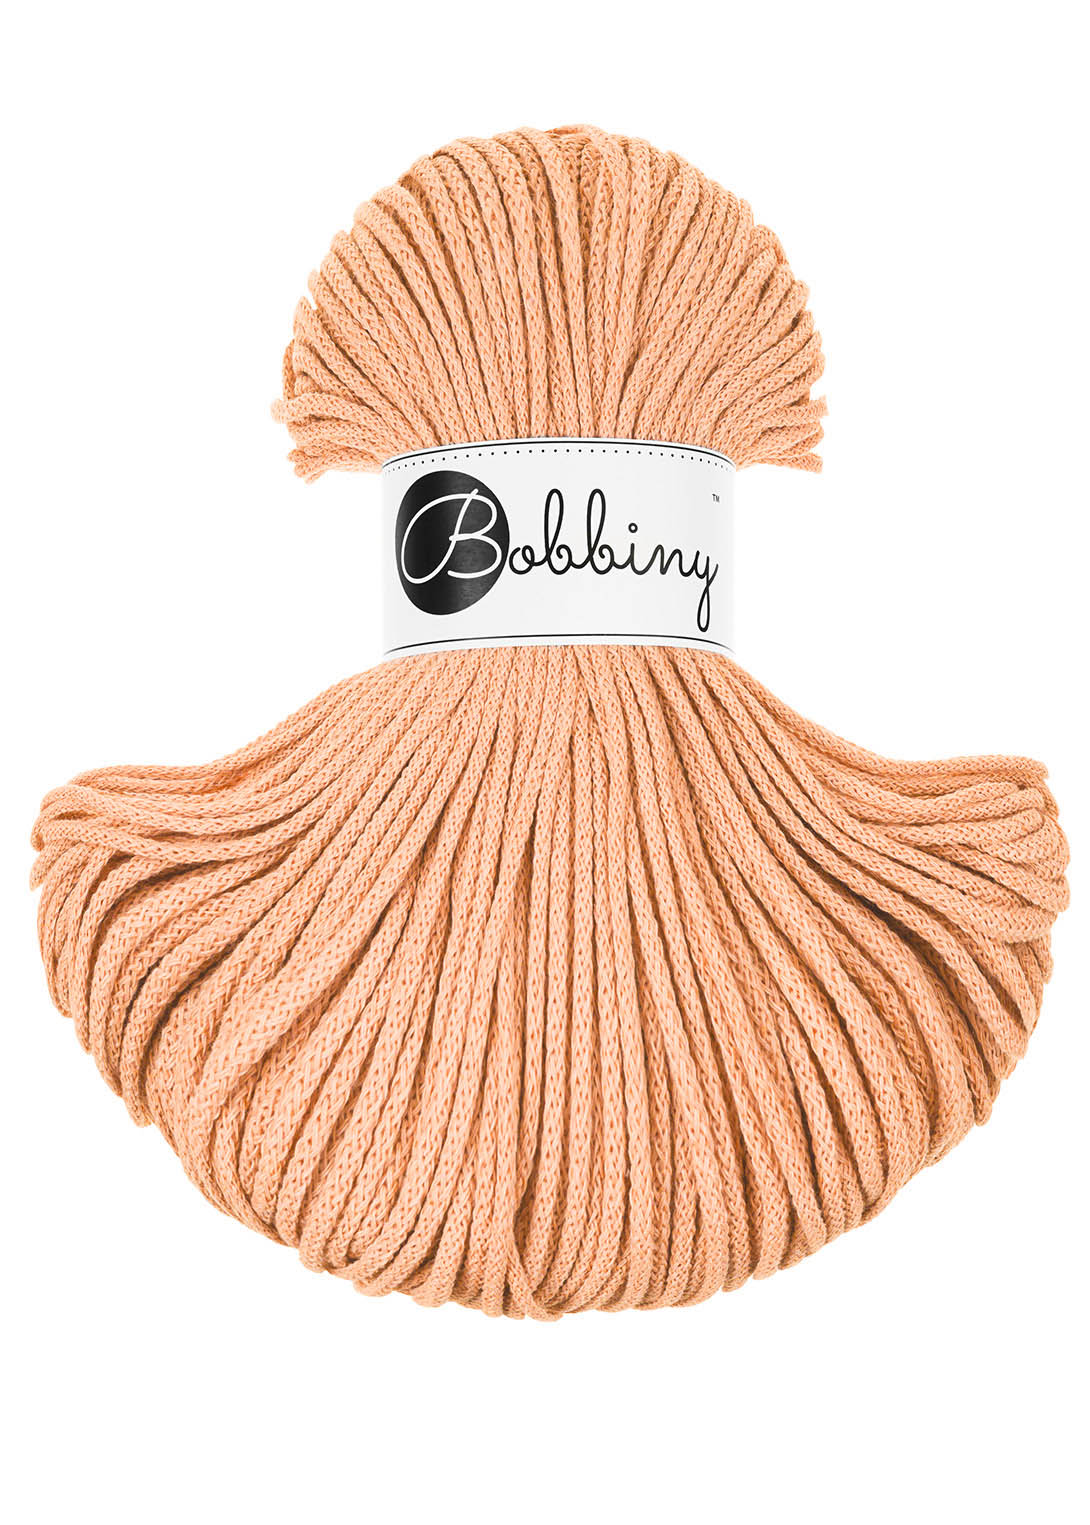 Bobbiny braided cord in 3mm width in peach fuzz shade